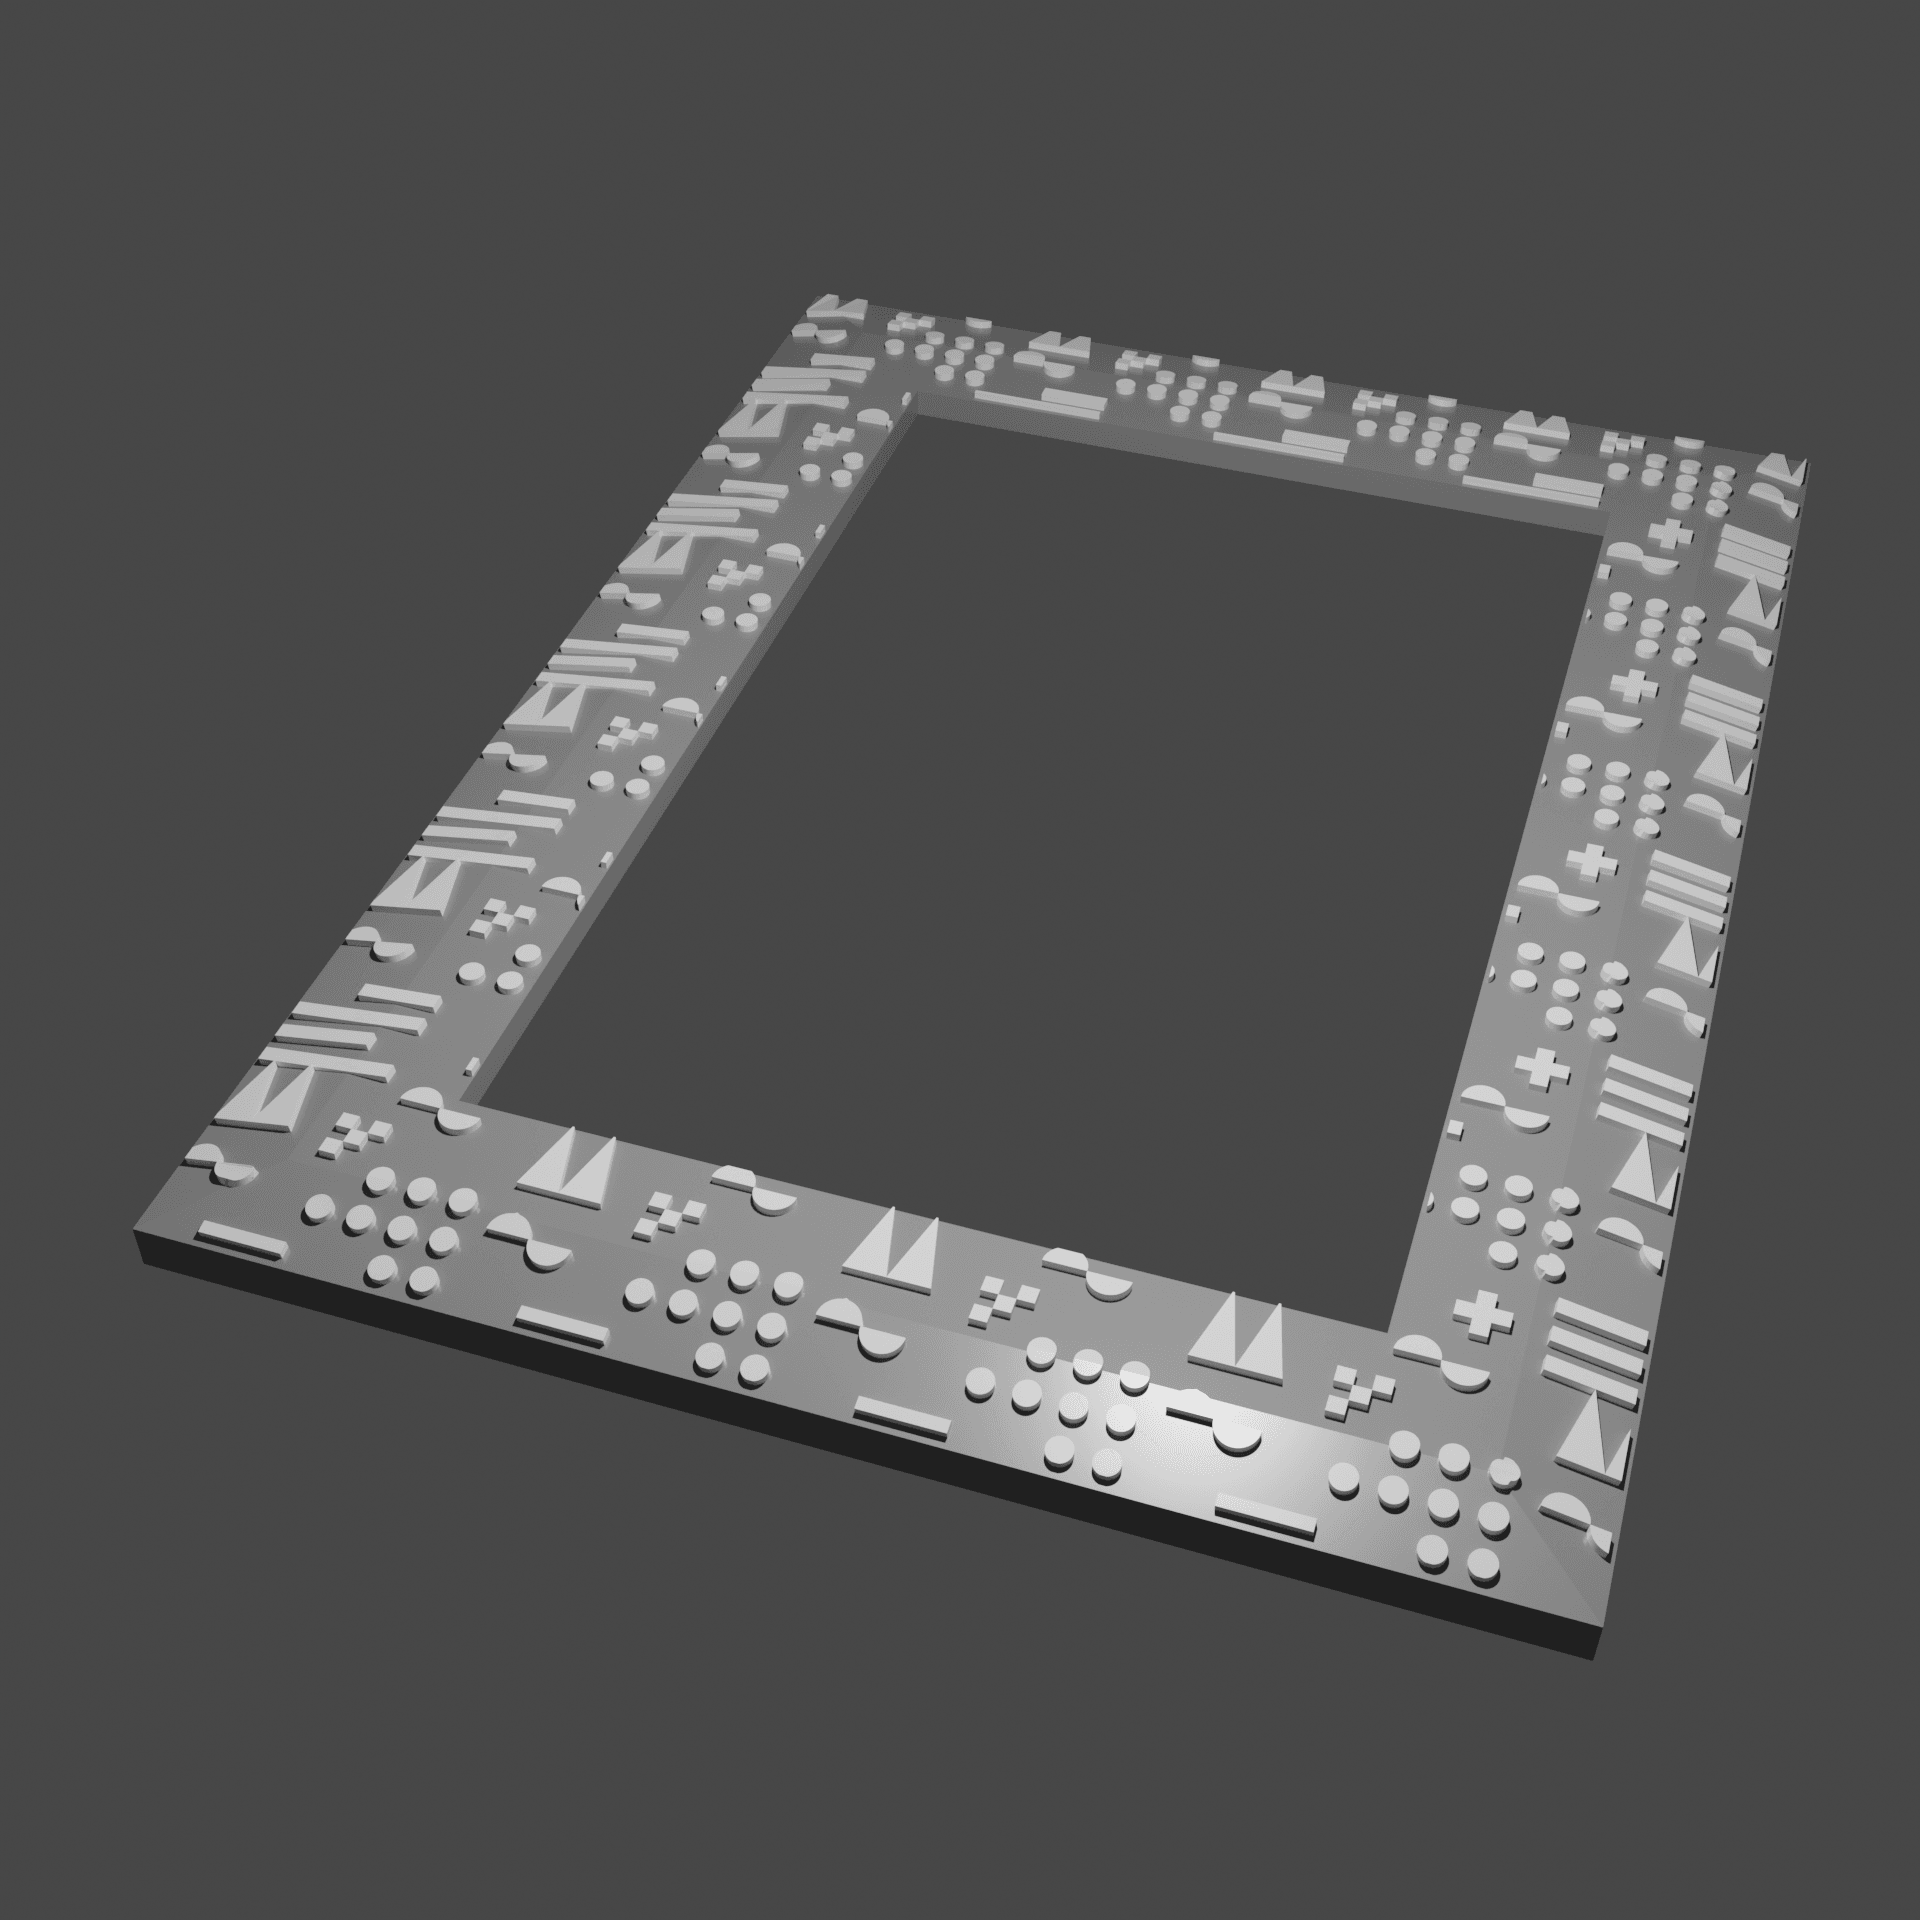 Random Shapes - Remix of 4x6 Picture Frame 2 3d model